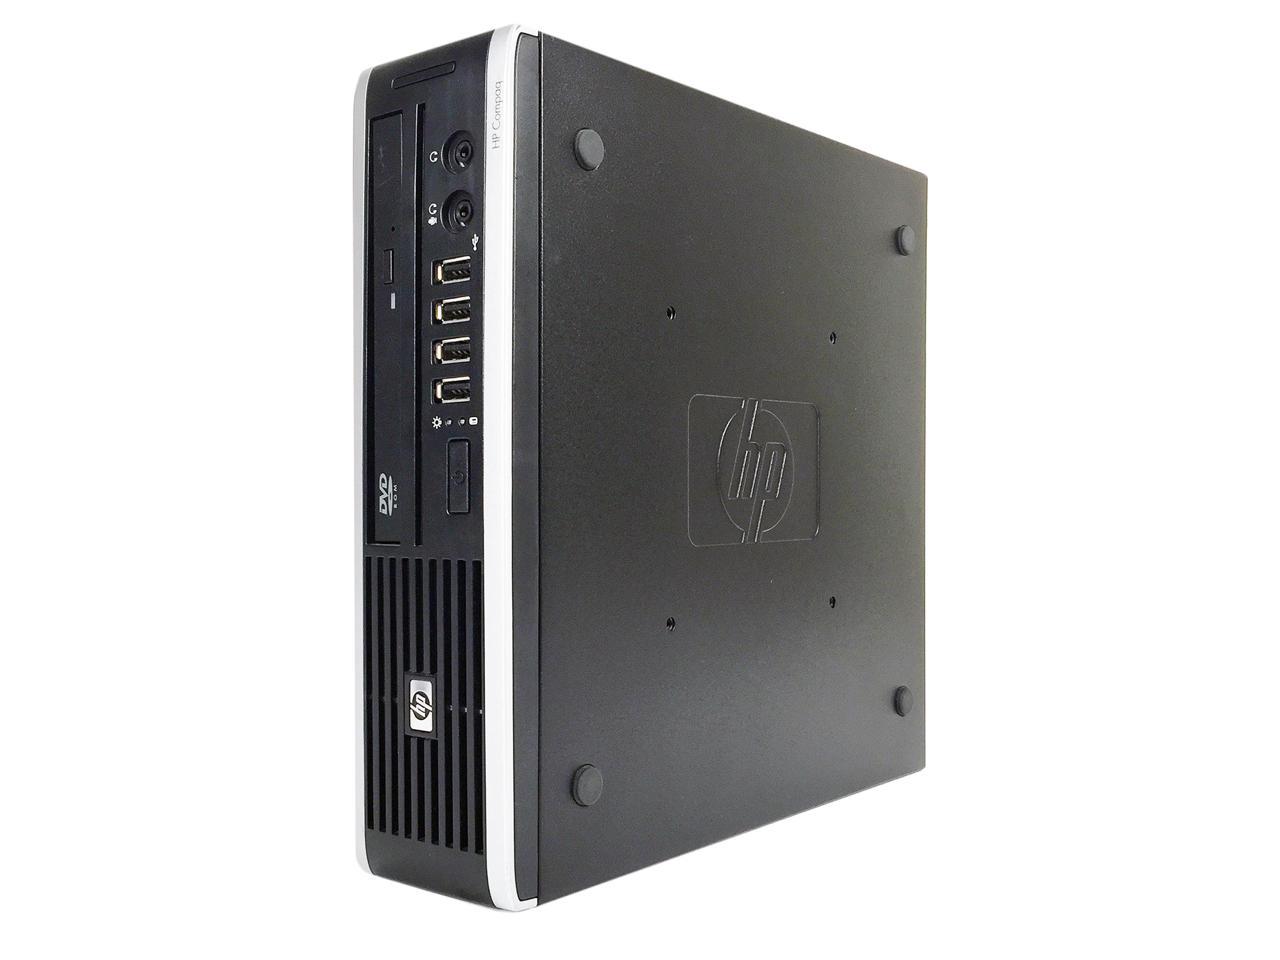 Refurbished HP Grade A Compaq 8200 Elite Ultra-slim PC Intel Core i5 2500S (2.7 GHz), 4 GB DDR3, 250GB, WIFI, Bluetooth 4.0, DVD, Win 10 Pro 64-bit (EN/ES), 1 Year Warranty